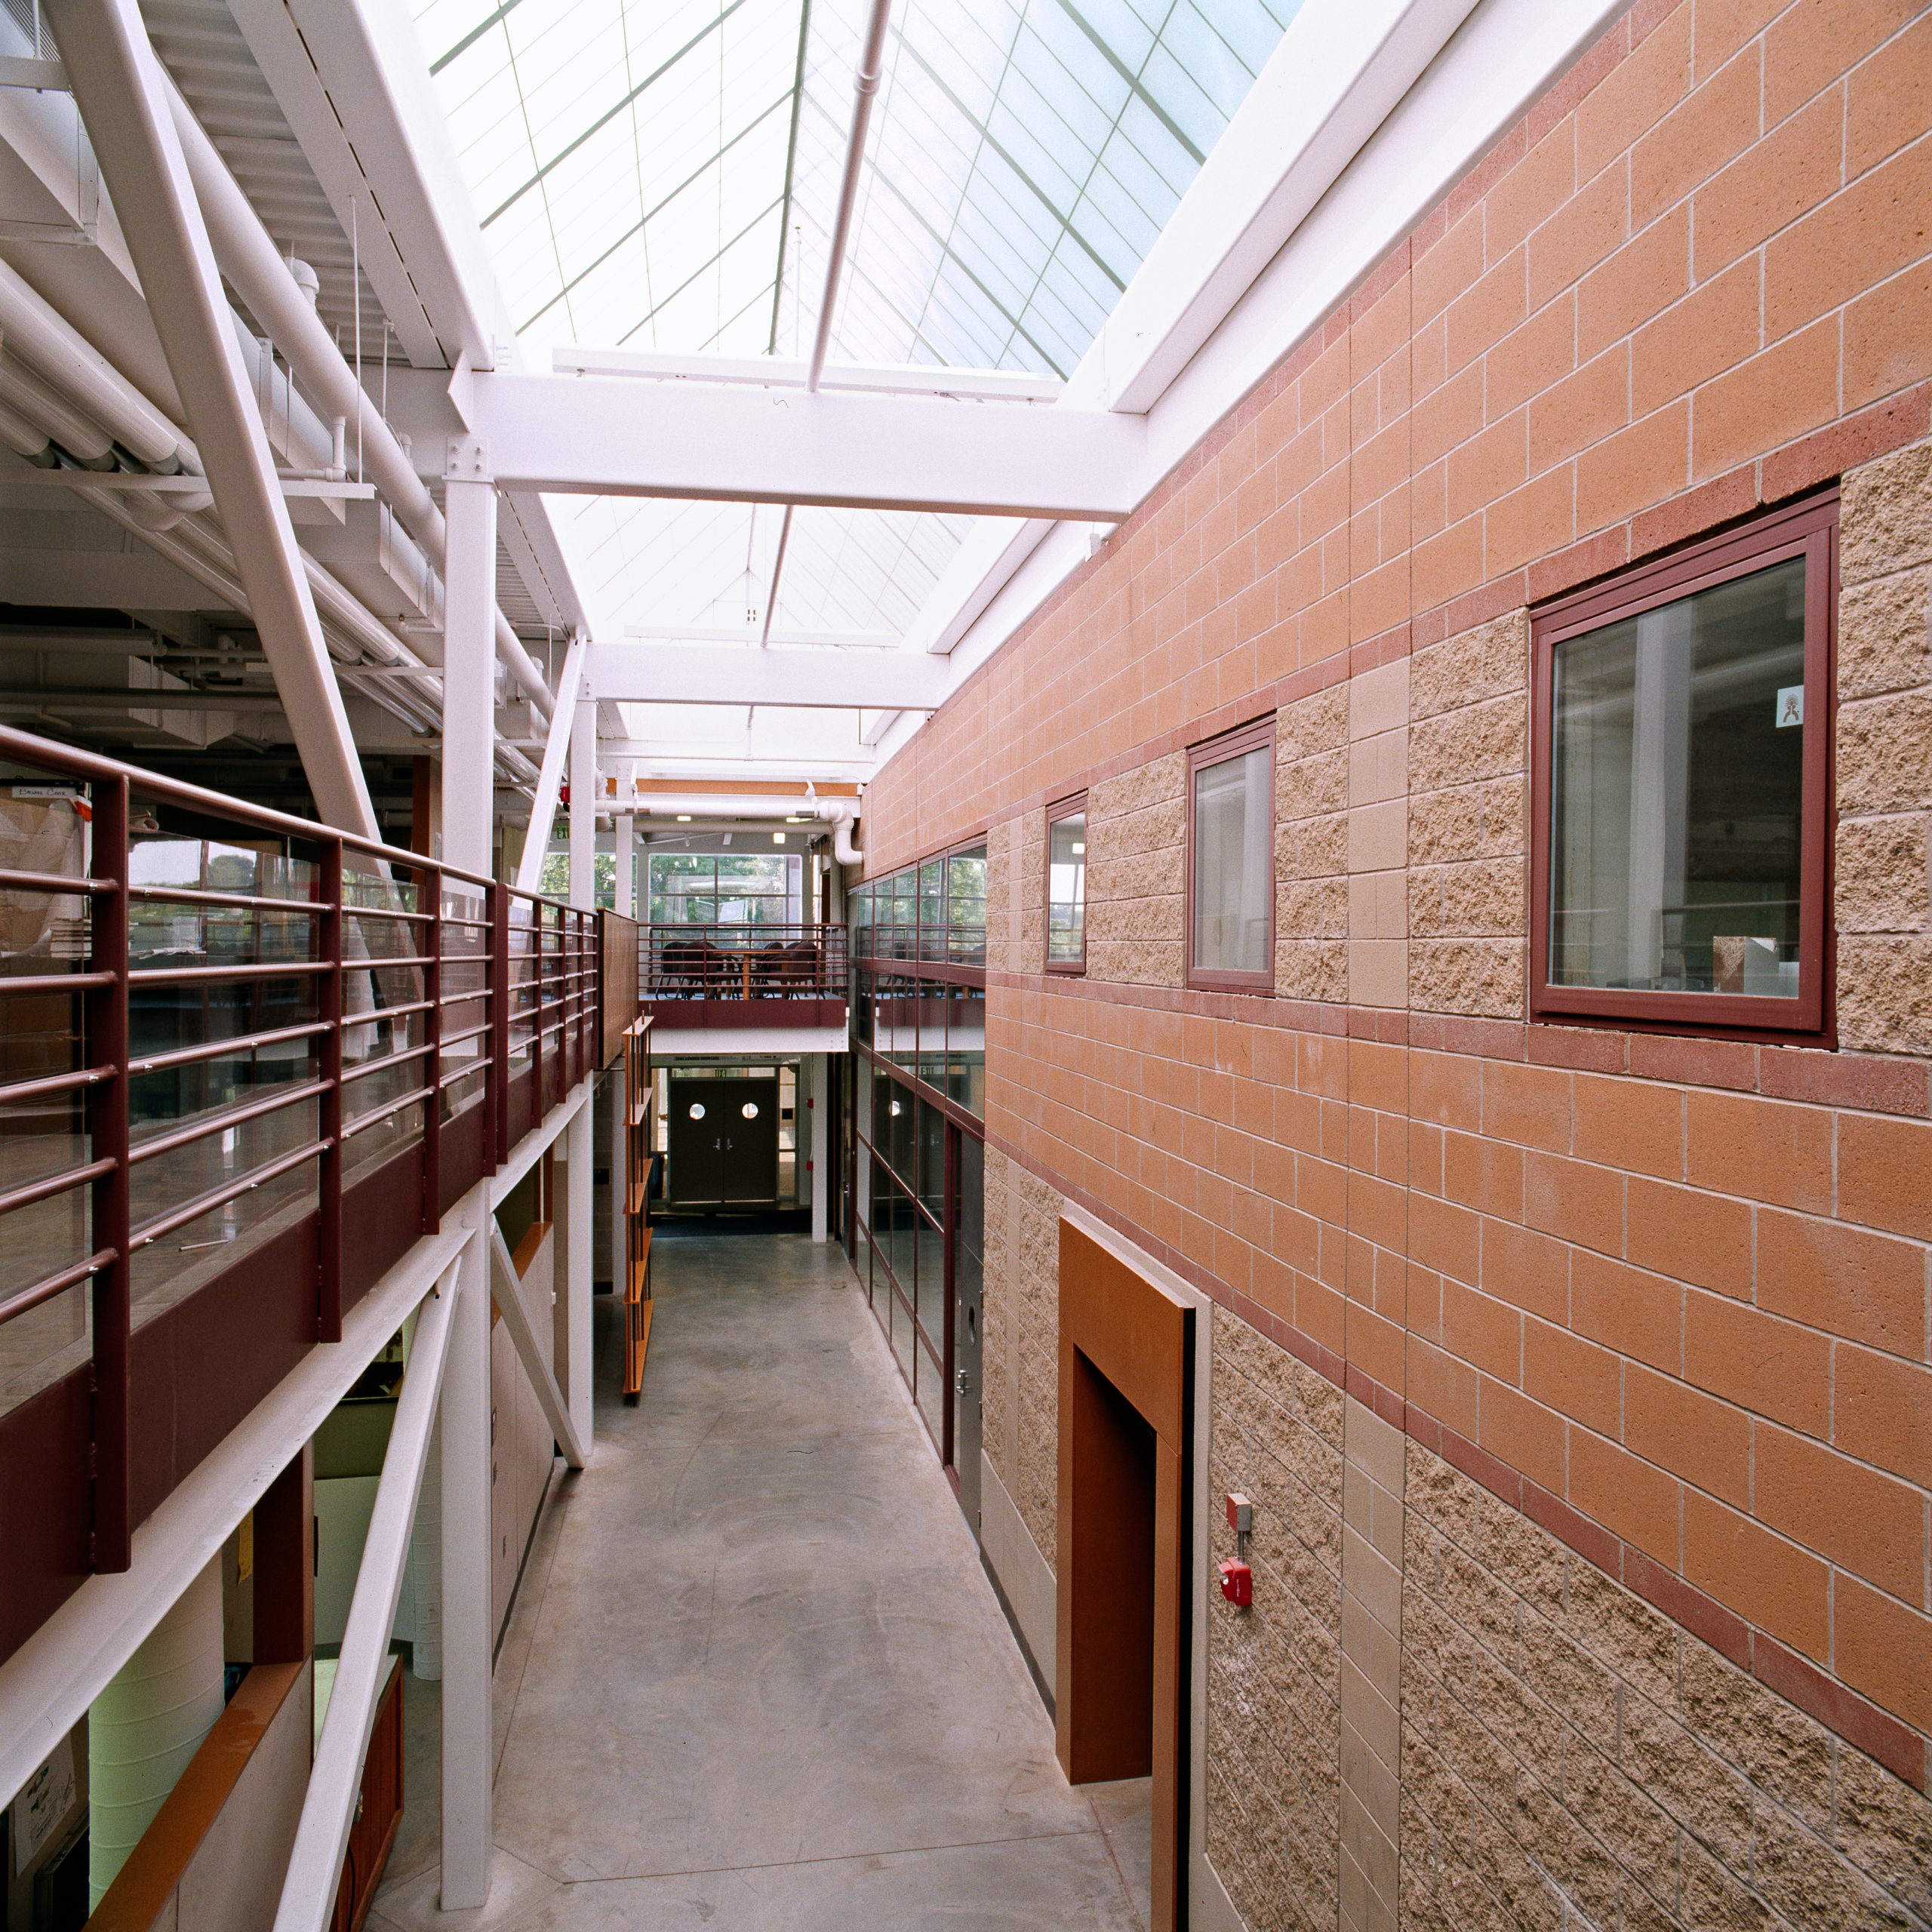 Kite_0361_Roger Williams_School of Architecture_Interior_Hall